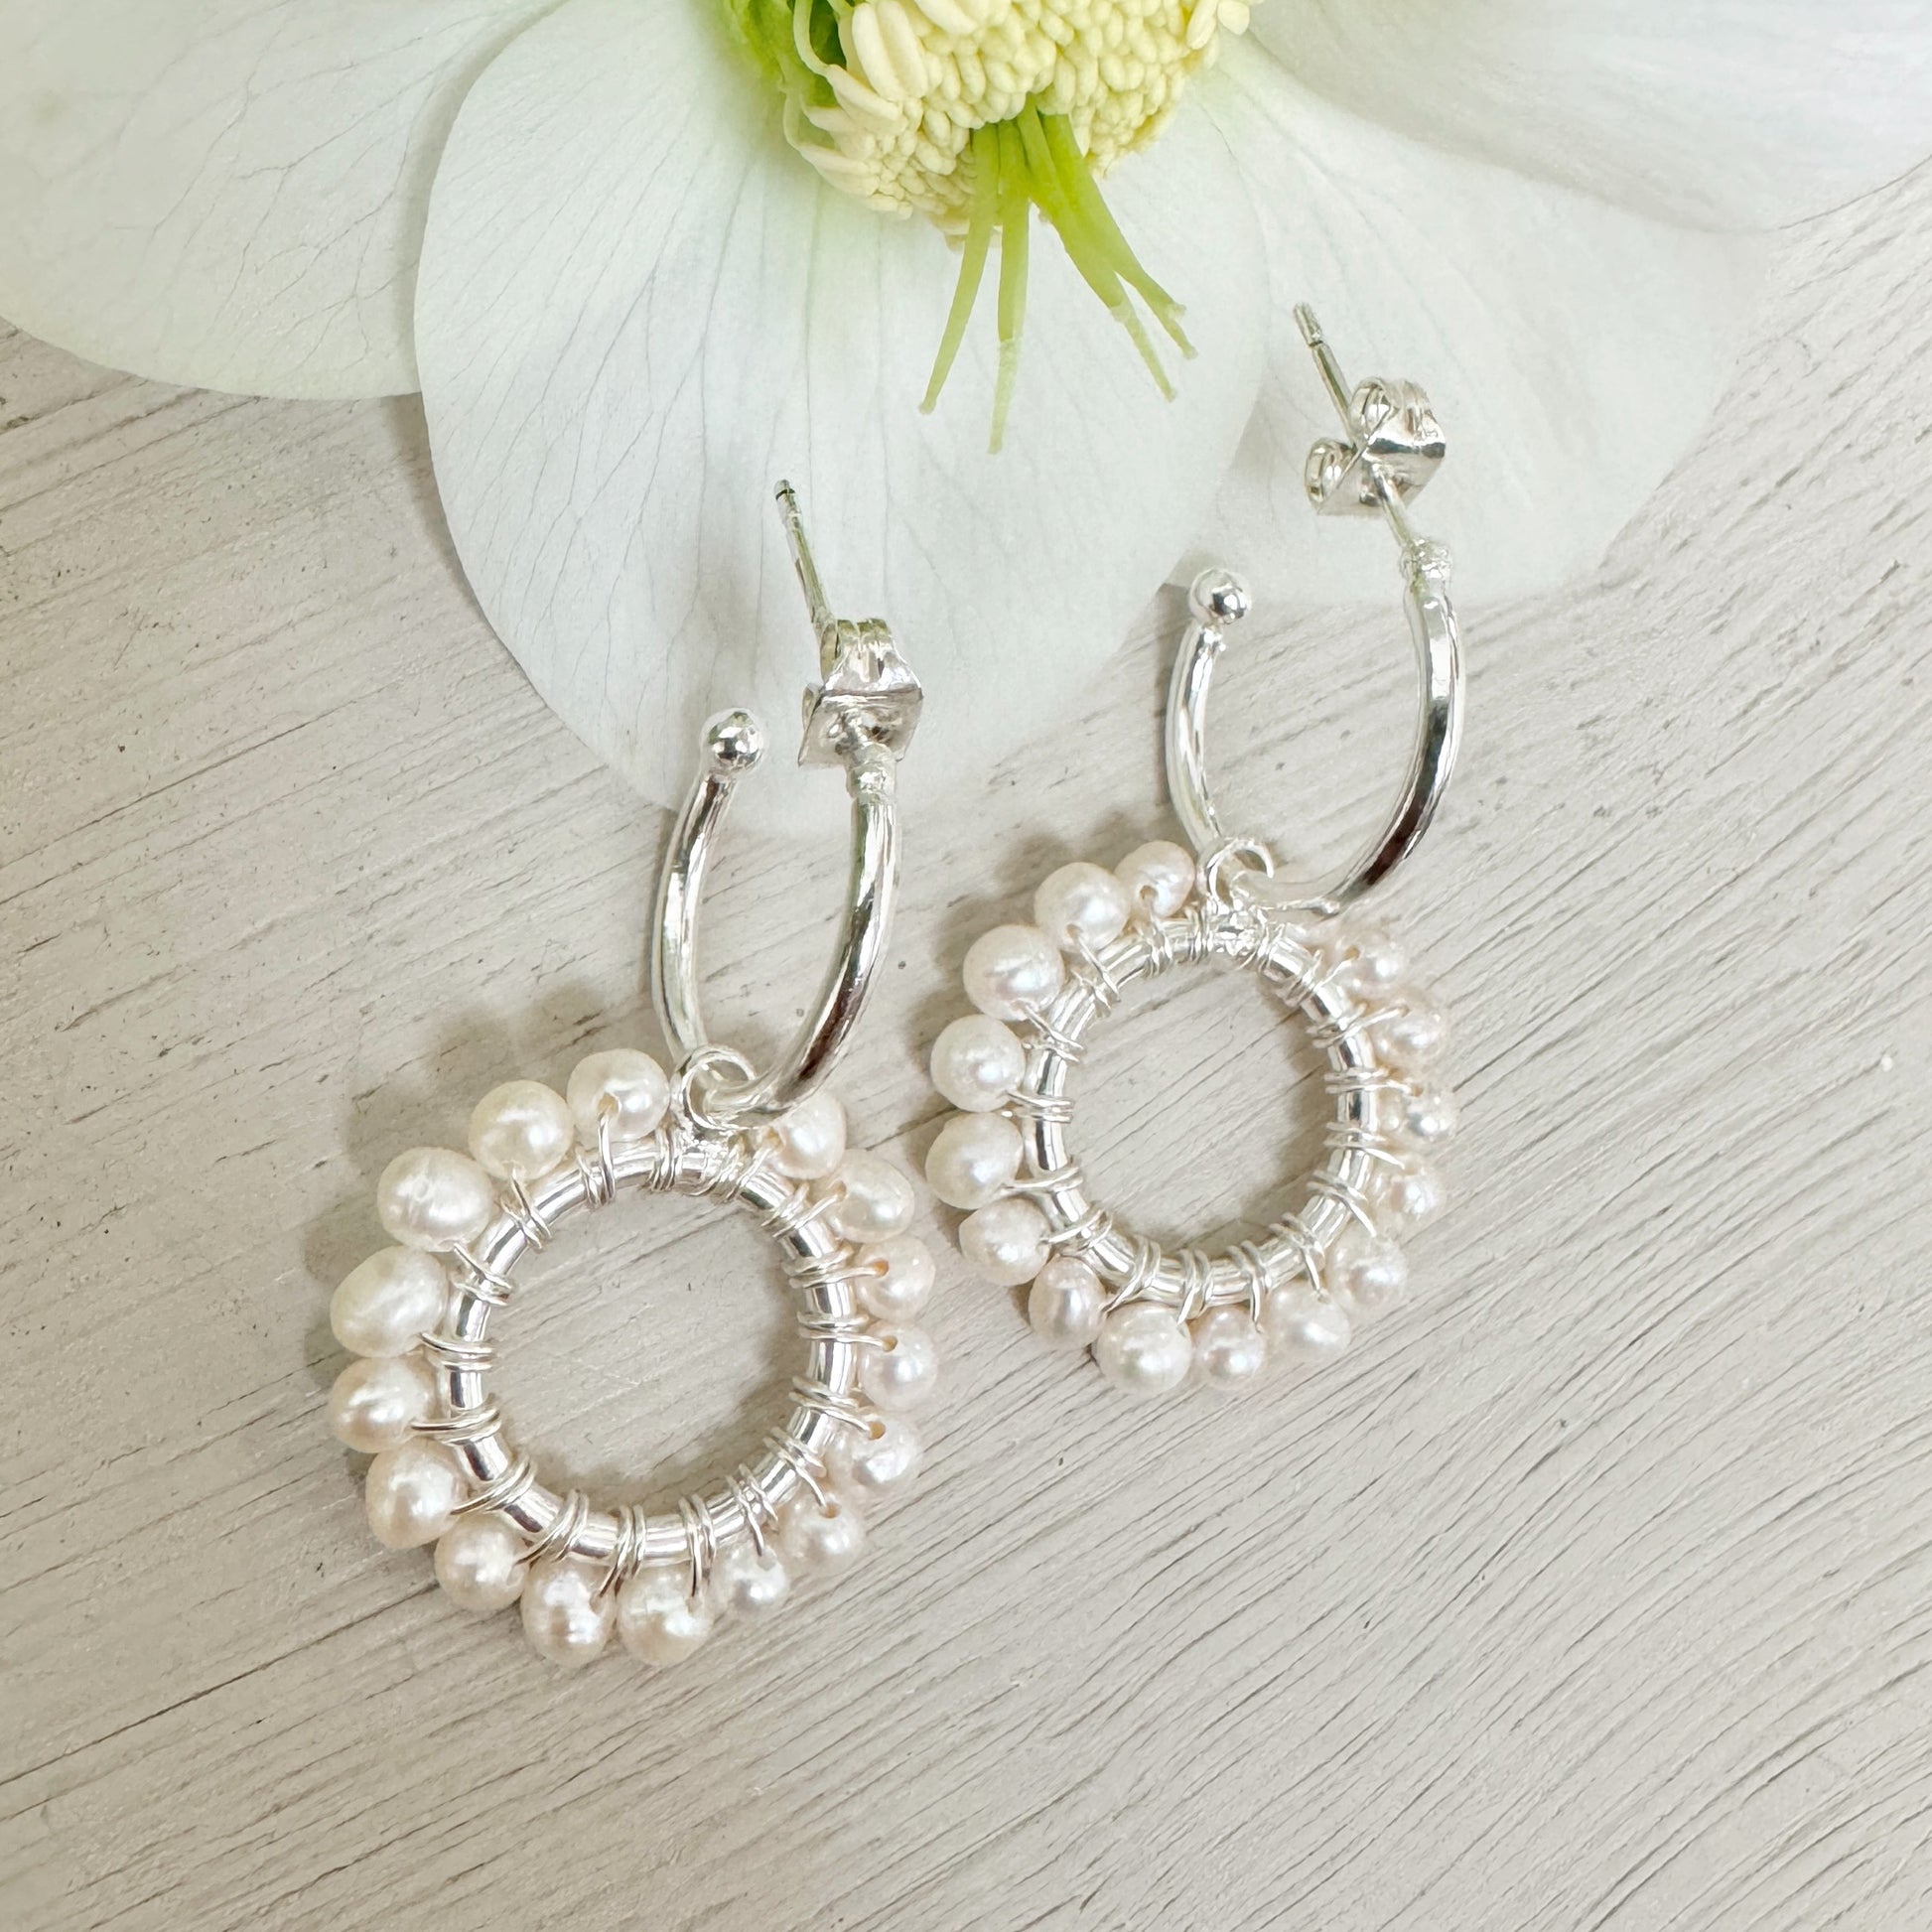 Mini Hoop Earrings With Pearl Beaded Circle Charms (Silver)